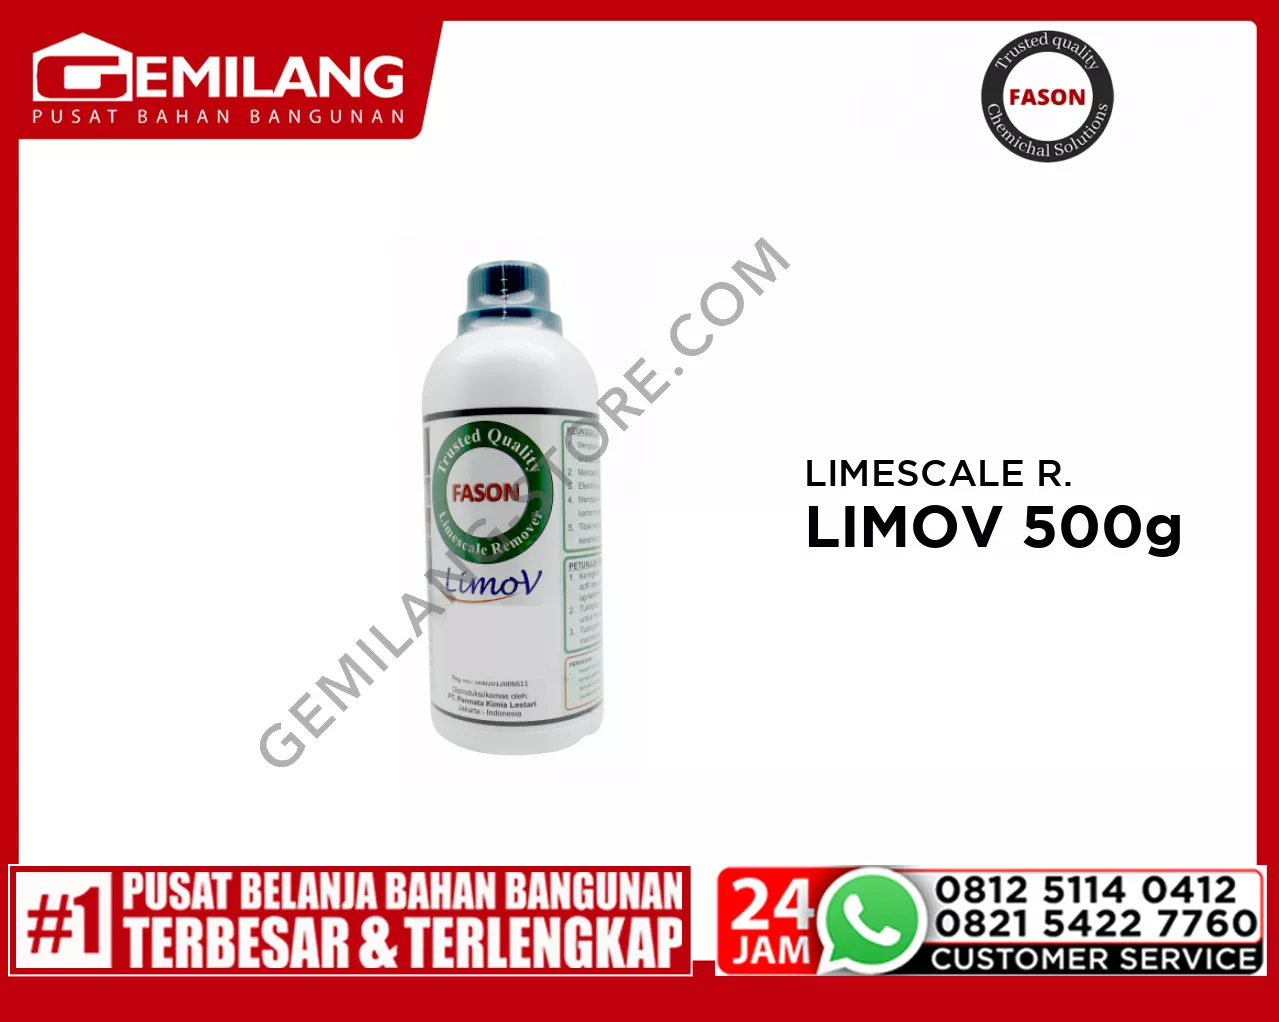 FASON LIMESCALE REMOVER (LIMOV) 500g